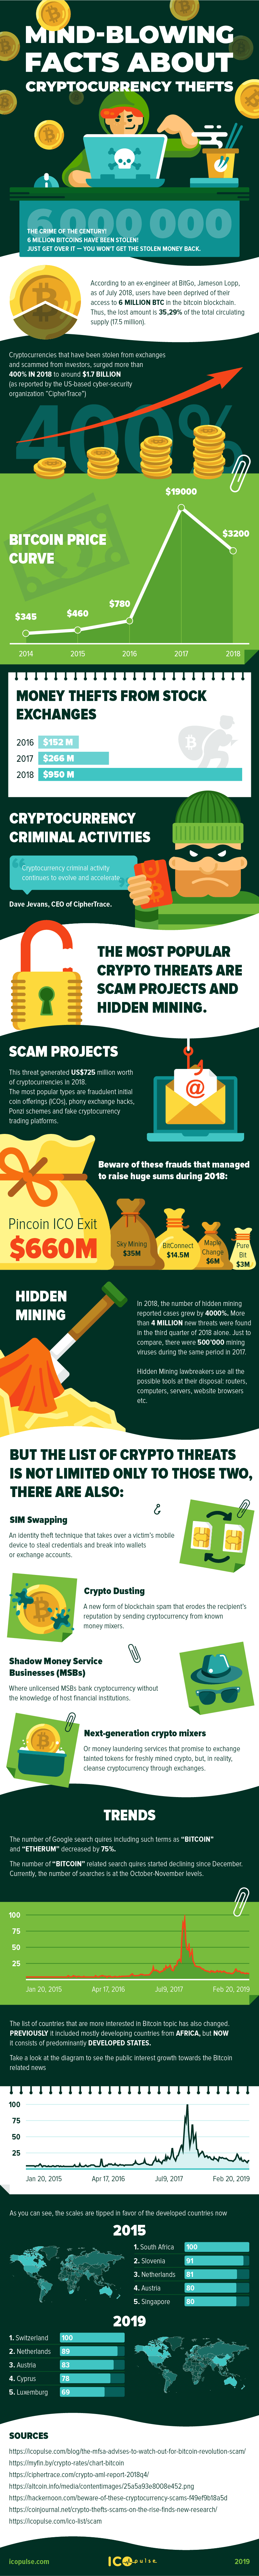 stolen bitcoin infographic